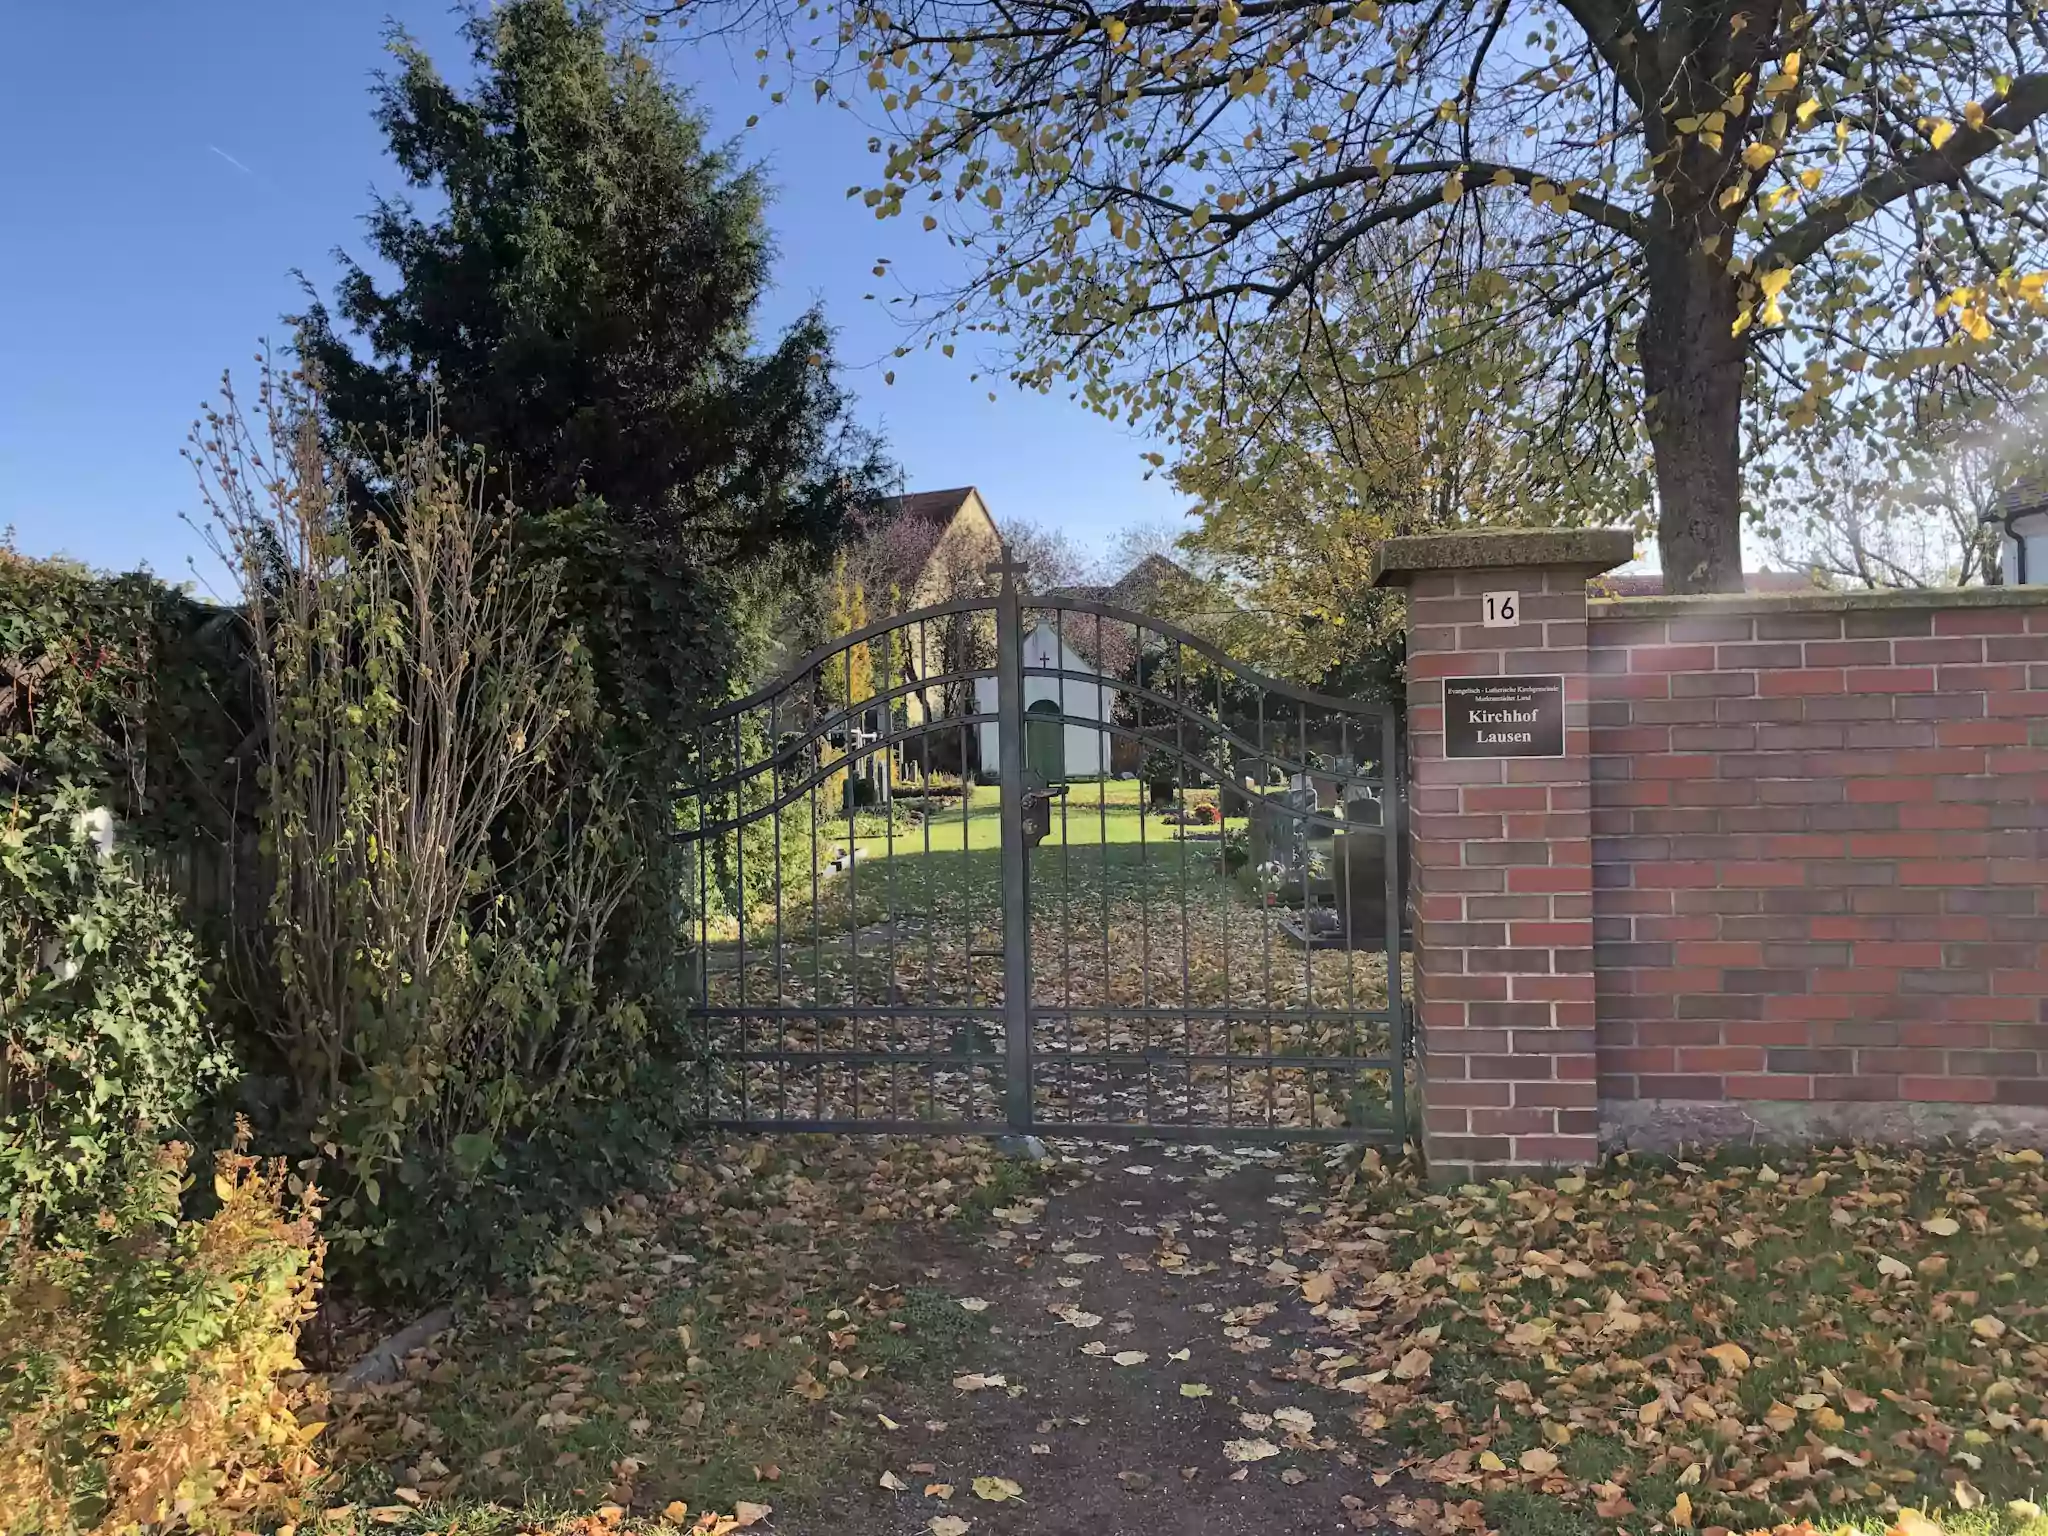 Eingang zum Friedhof Lausen